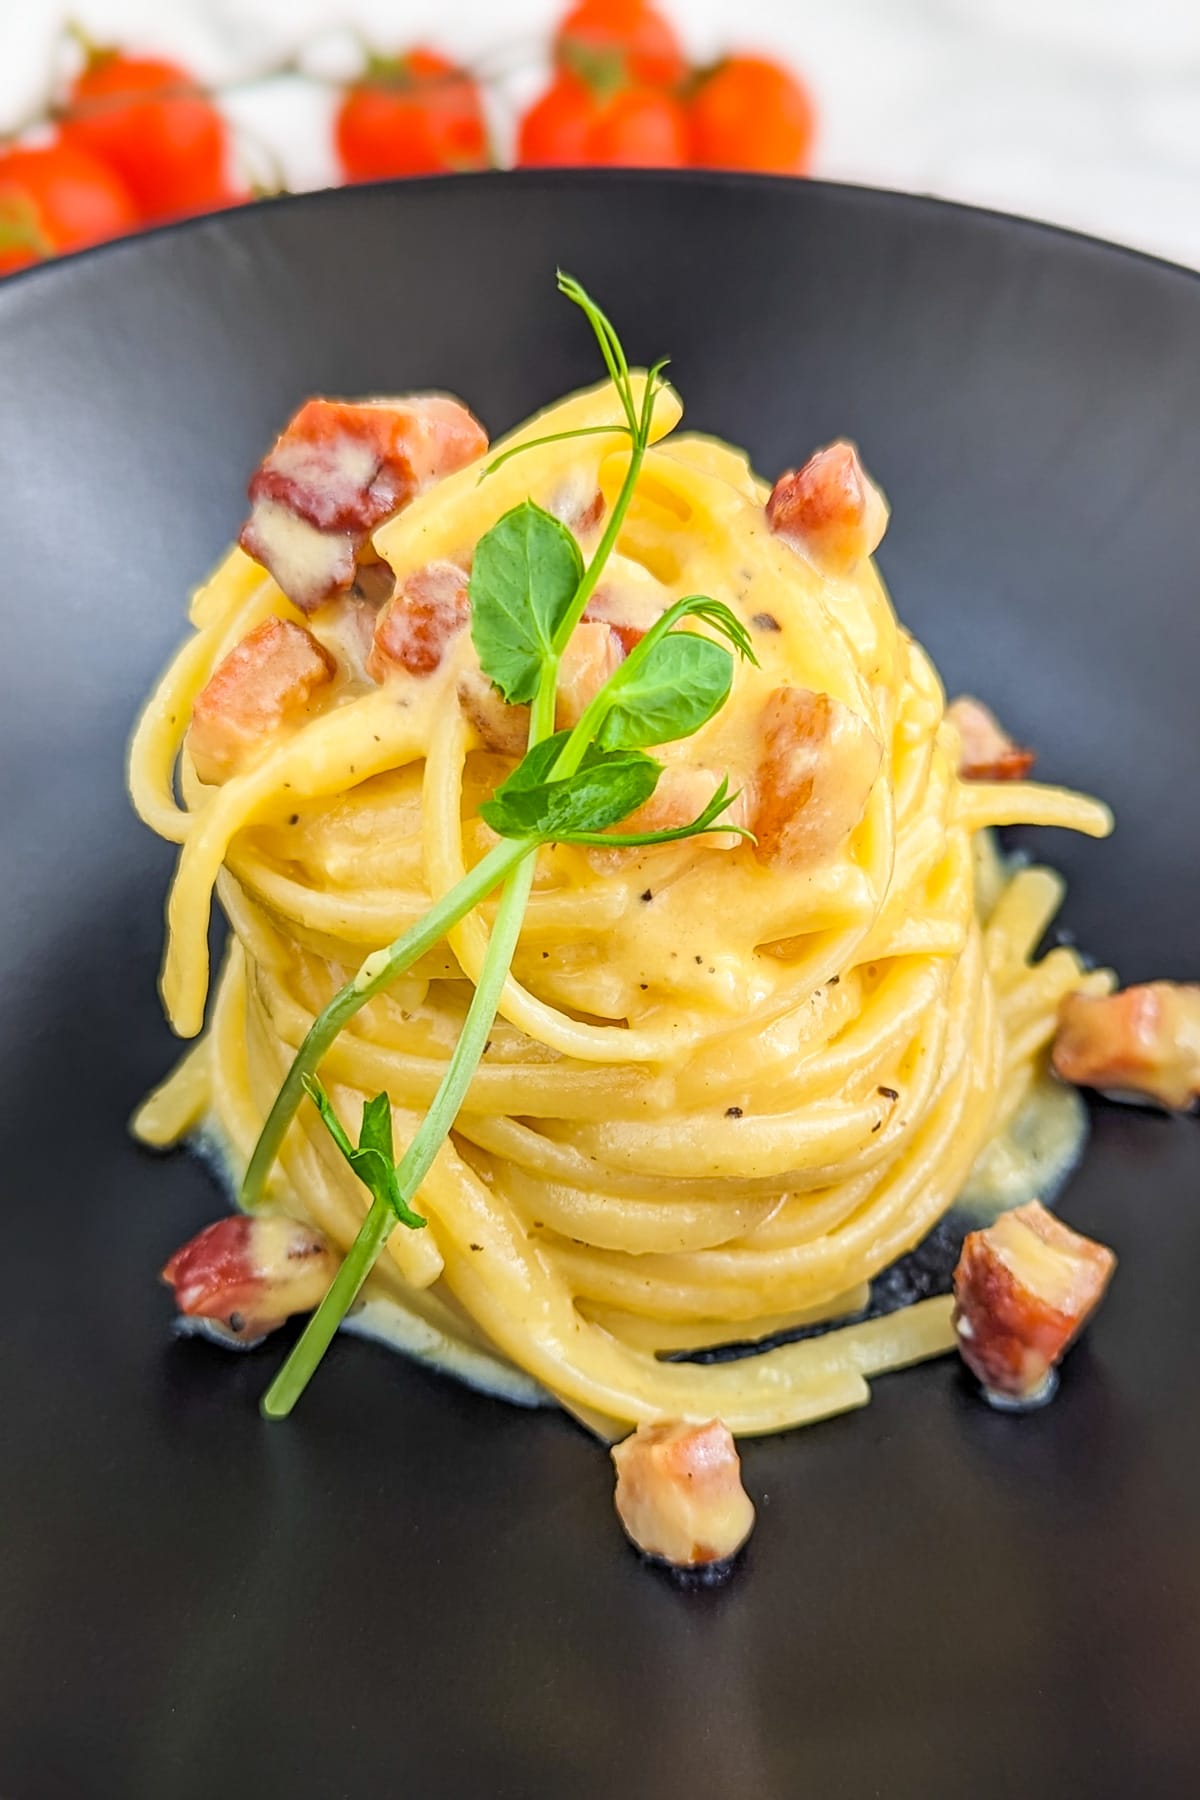 Elegant carbonara pasta with bacon arranged on a black plate.